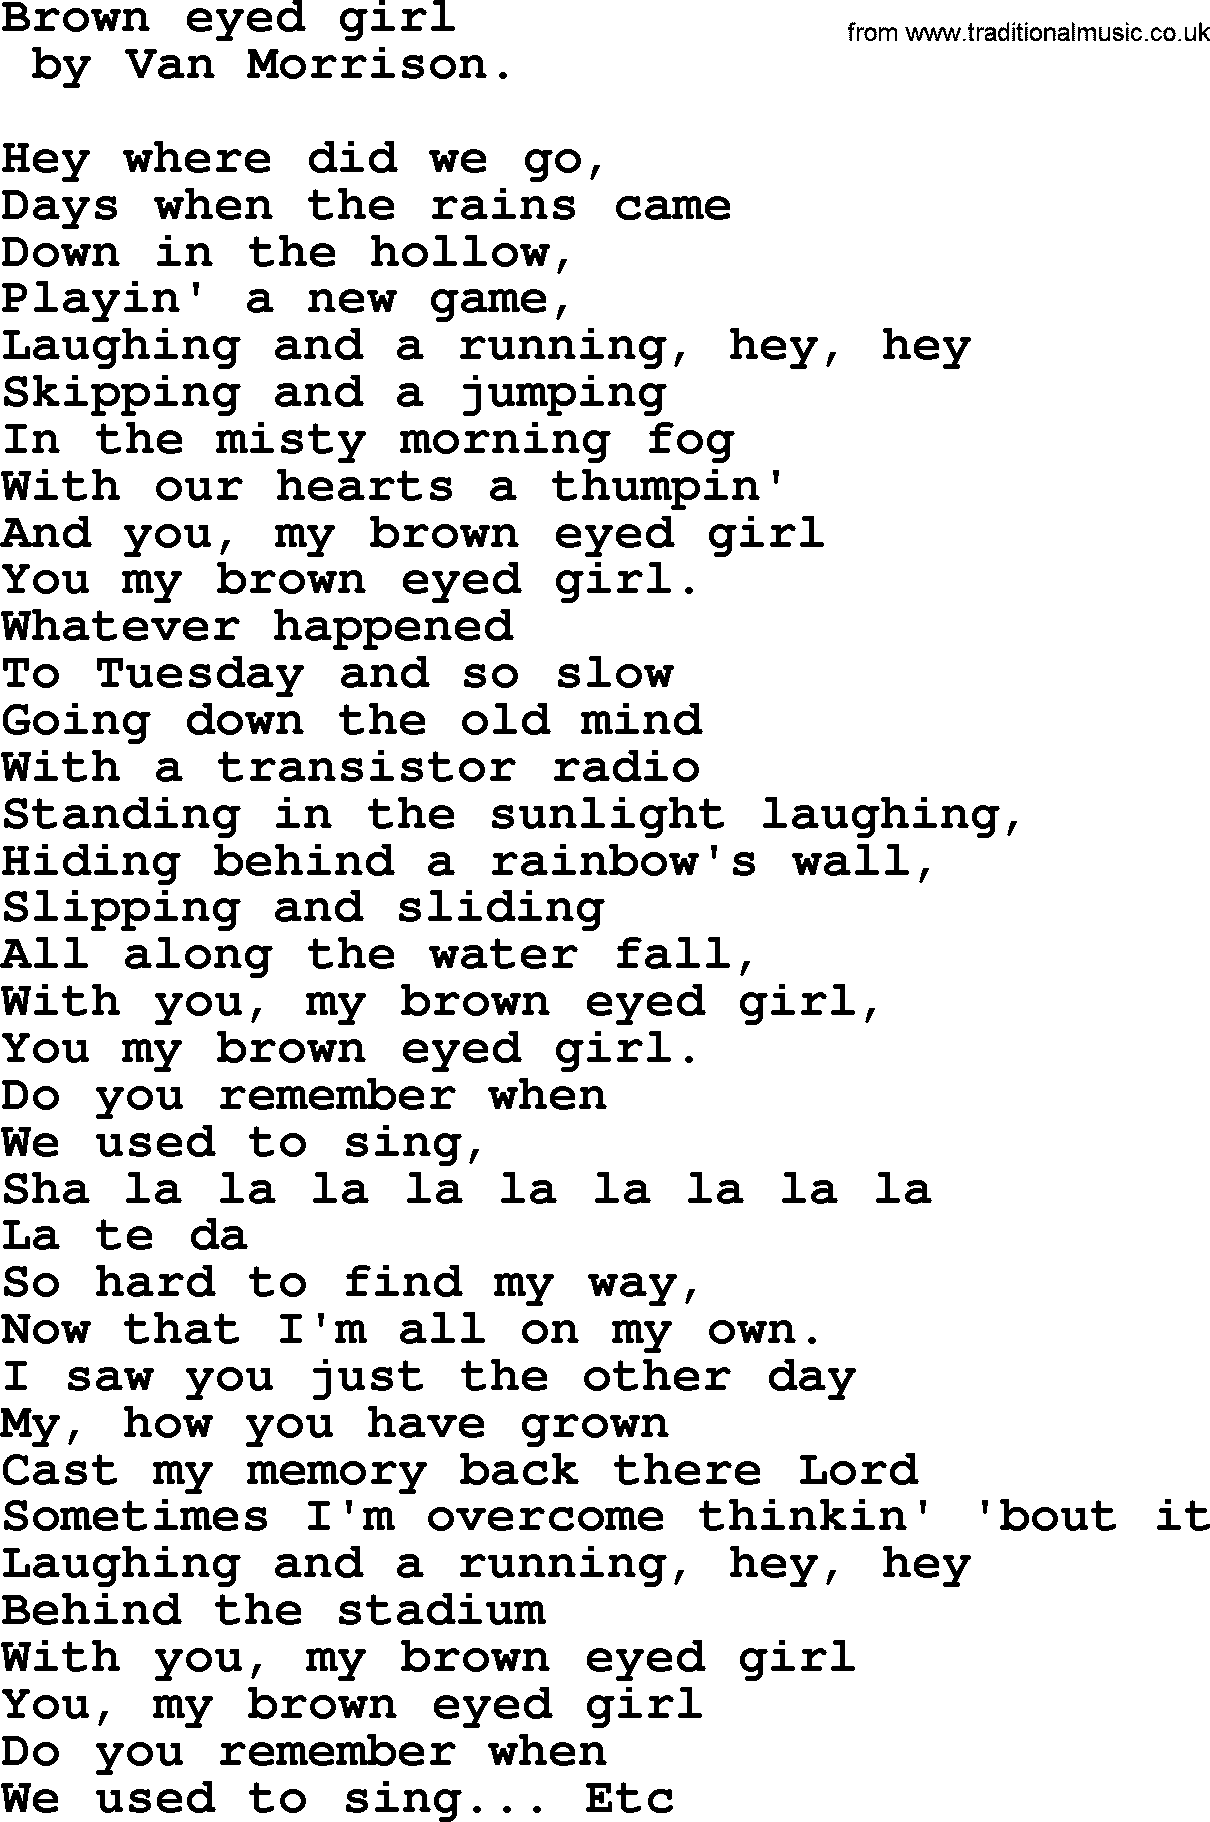 Bruce Springsteen song: Brown Eyed Girl lyrics